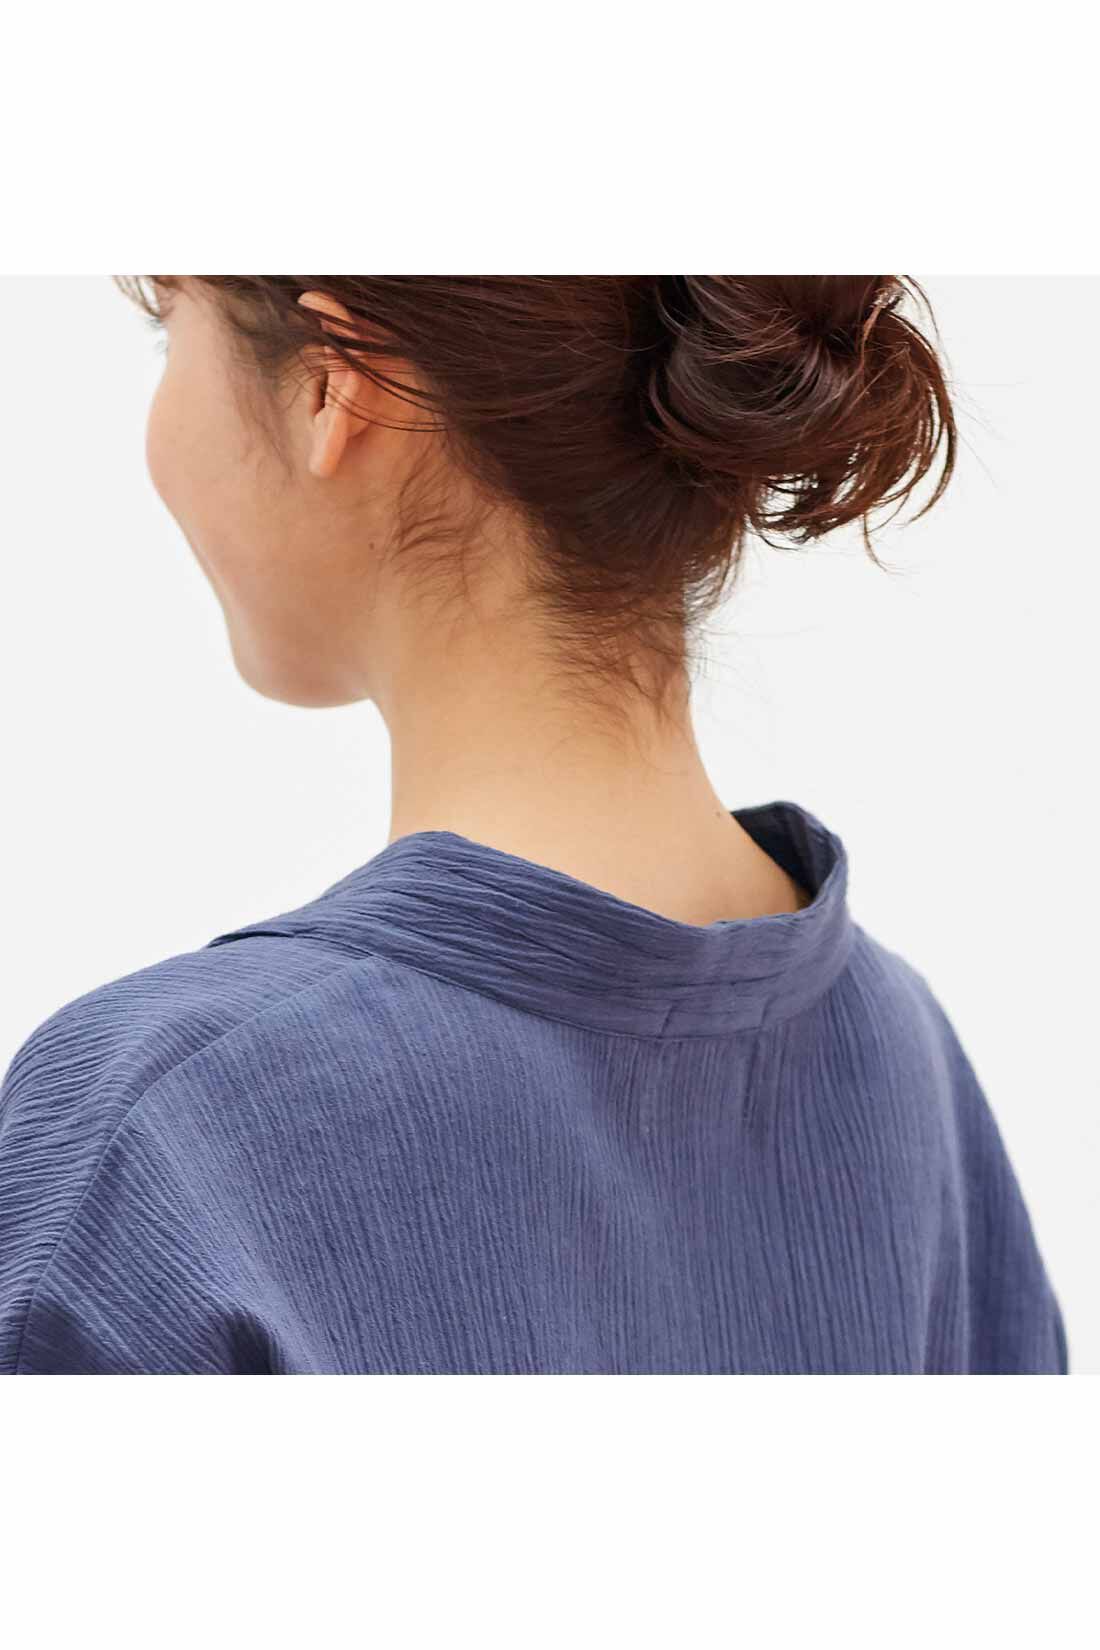 Live in  comfort|Live love cottonプロジェクト　リブ イン コンフォート　楊柳（ようりゅう）素材でサラリ オーガニックコットンロングチュニック〈スモーキーパープル〉|衿の後ろが自然に落ちて、着るだけで抜き衿が完成。